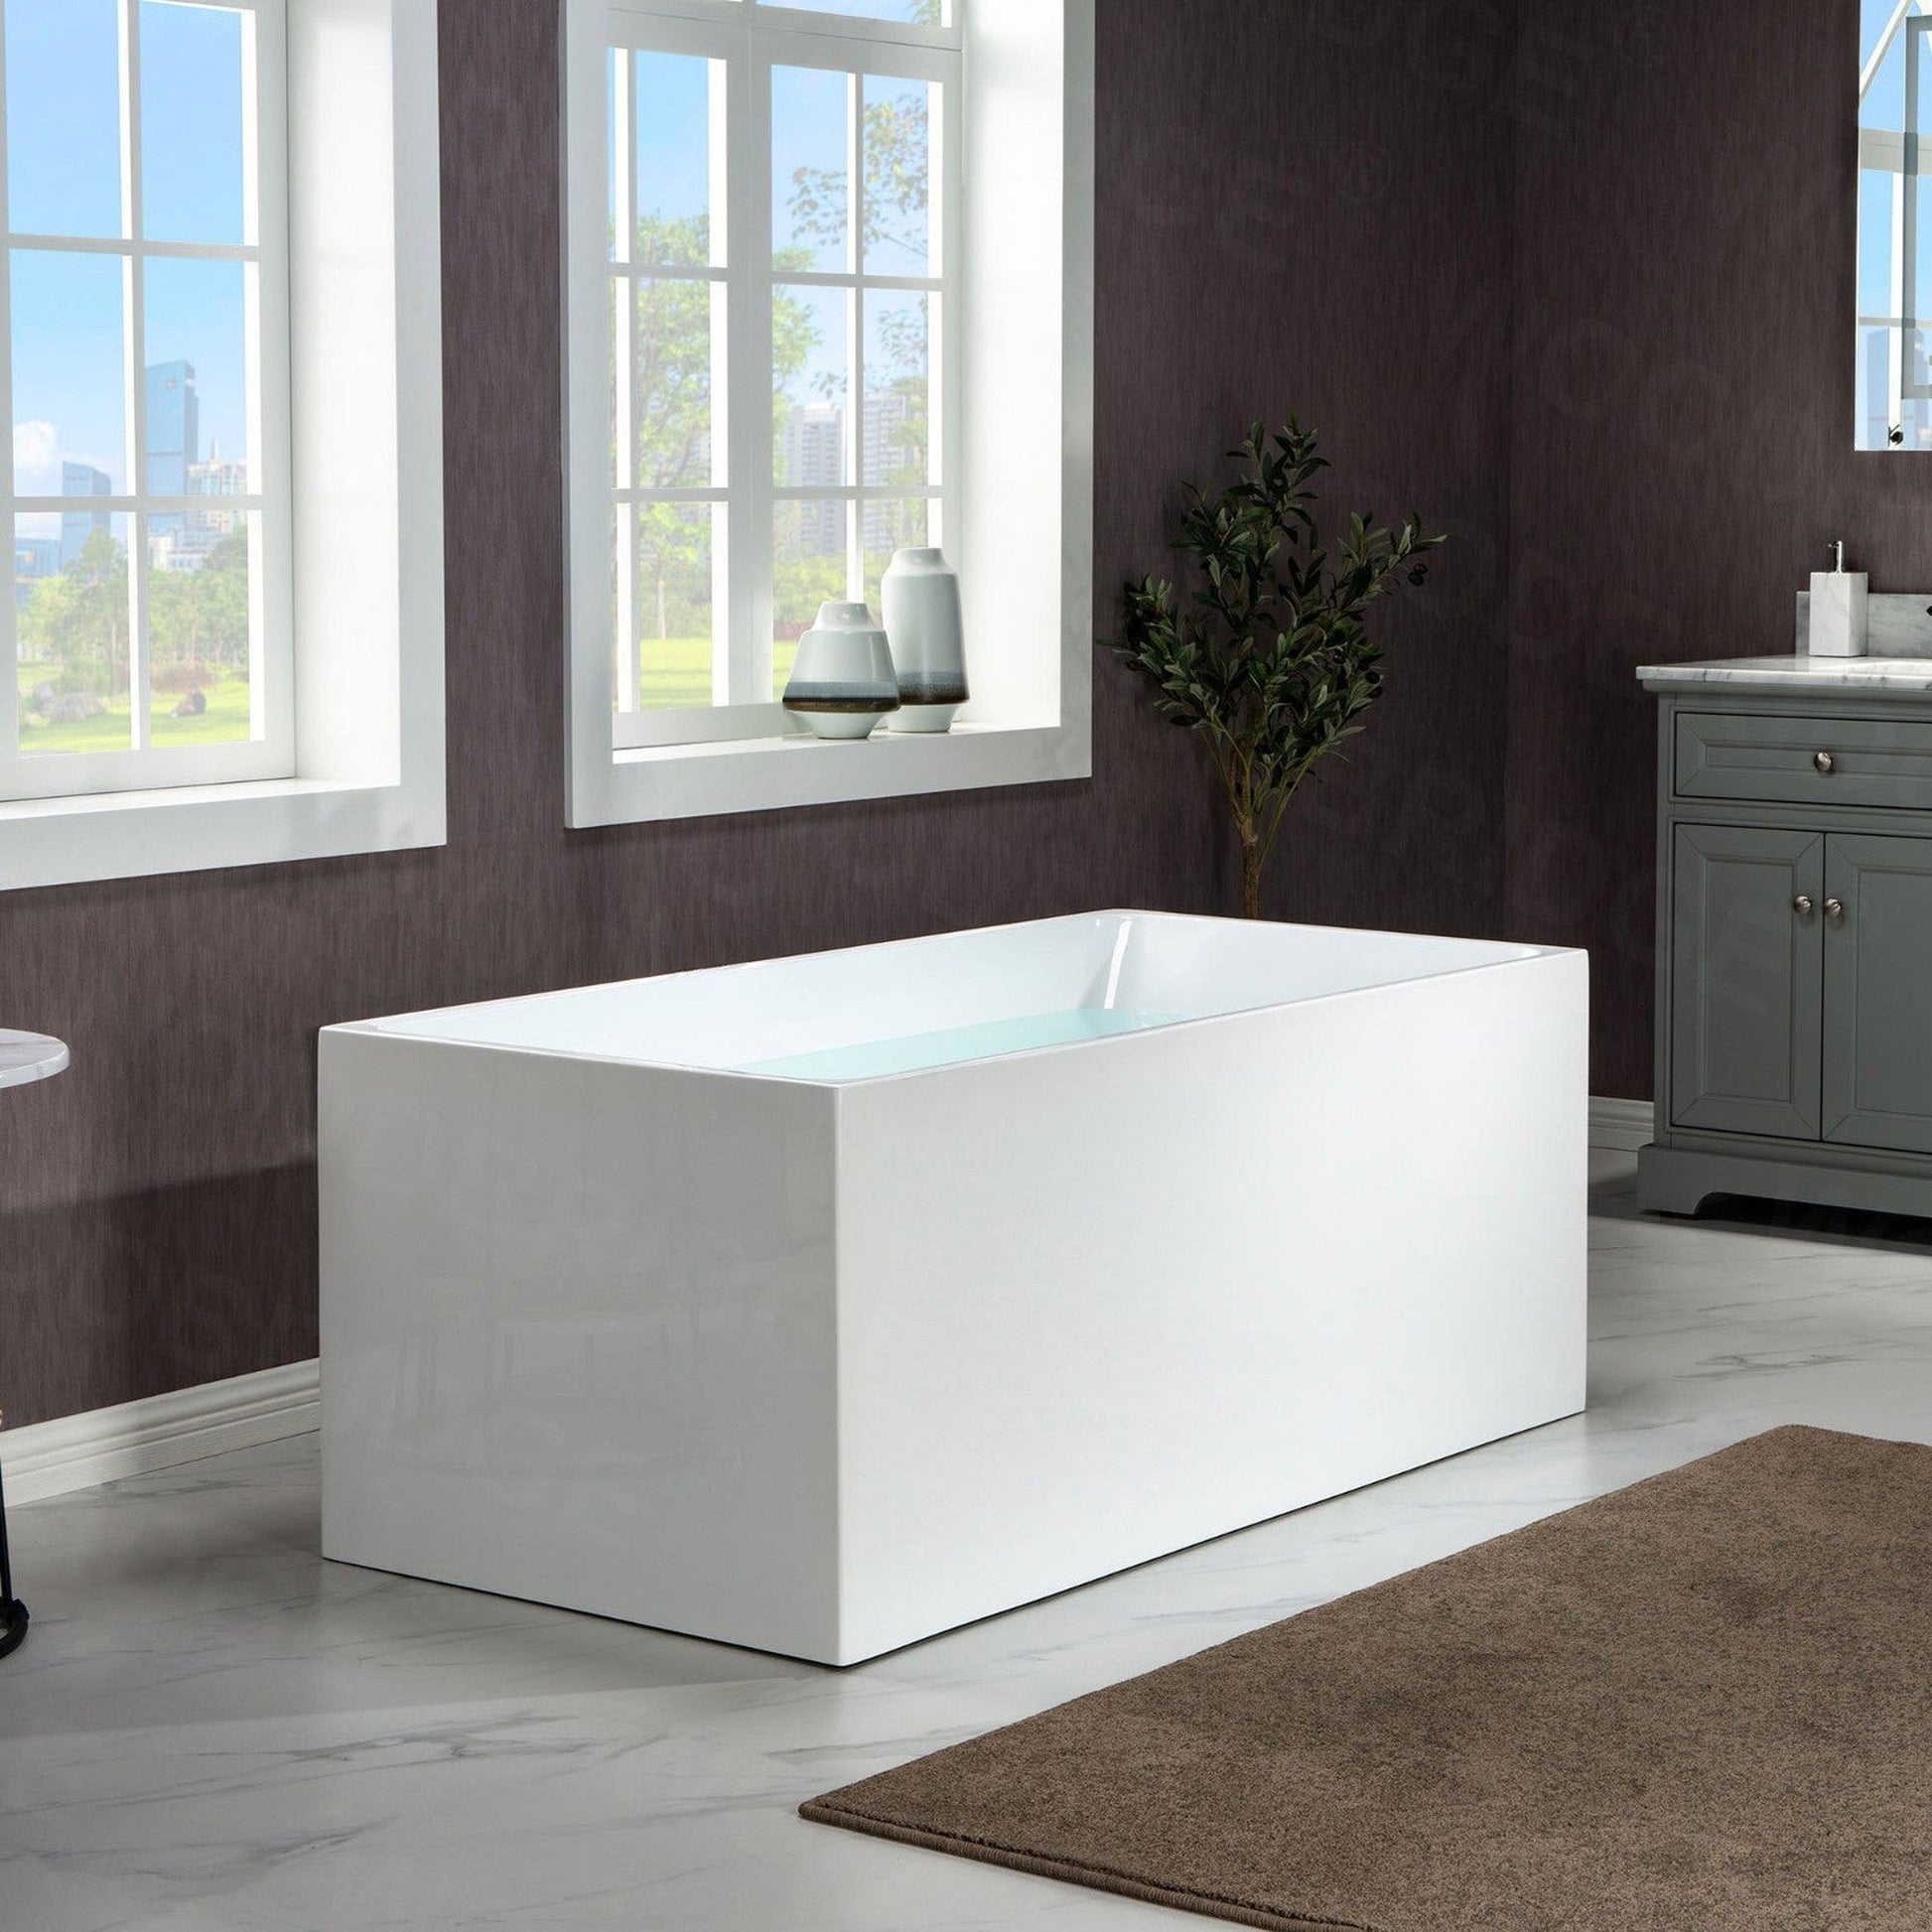 WoodBridge B-0085 59" White Acrylic Freestanding Soaking Bathtub With Matte Black Drain, Overflow, F0072MBVT Tub Filler and Caddy Tray